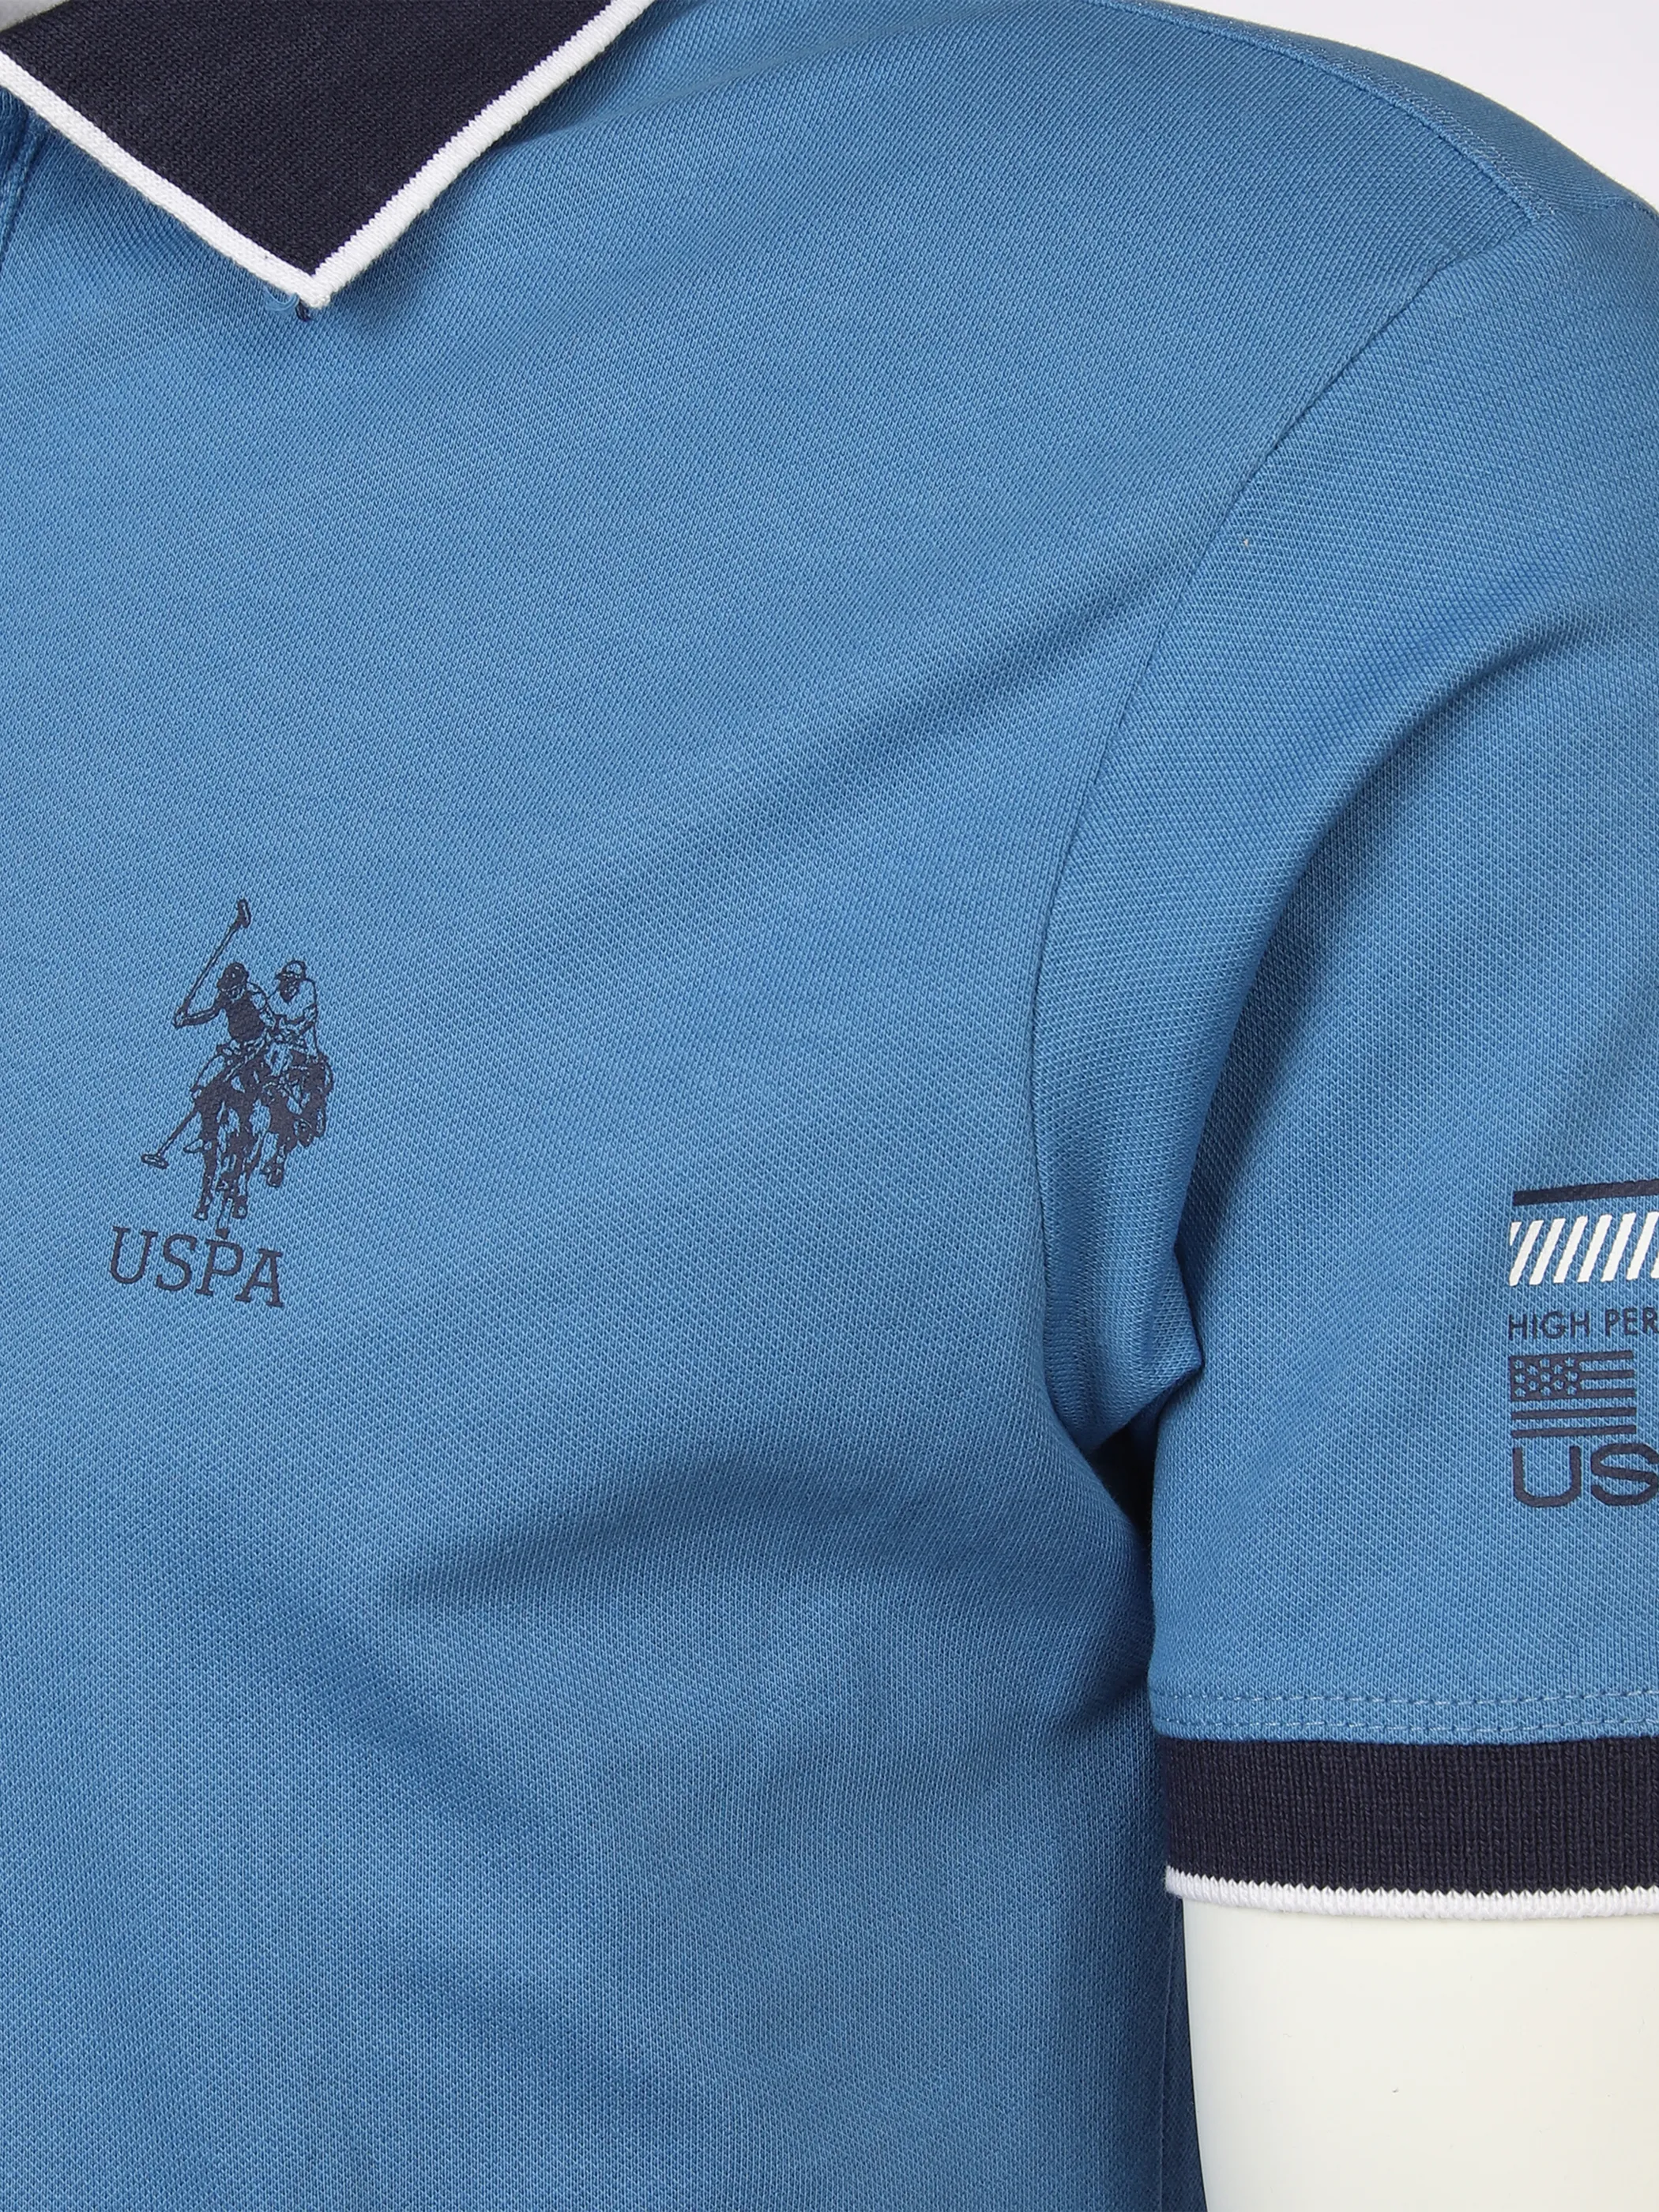 U.S. Polo Assn. He. Poloshirt 1/2 Arm Blau 881266 BLAU 3